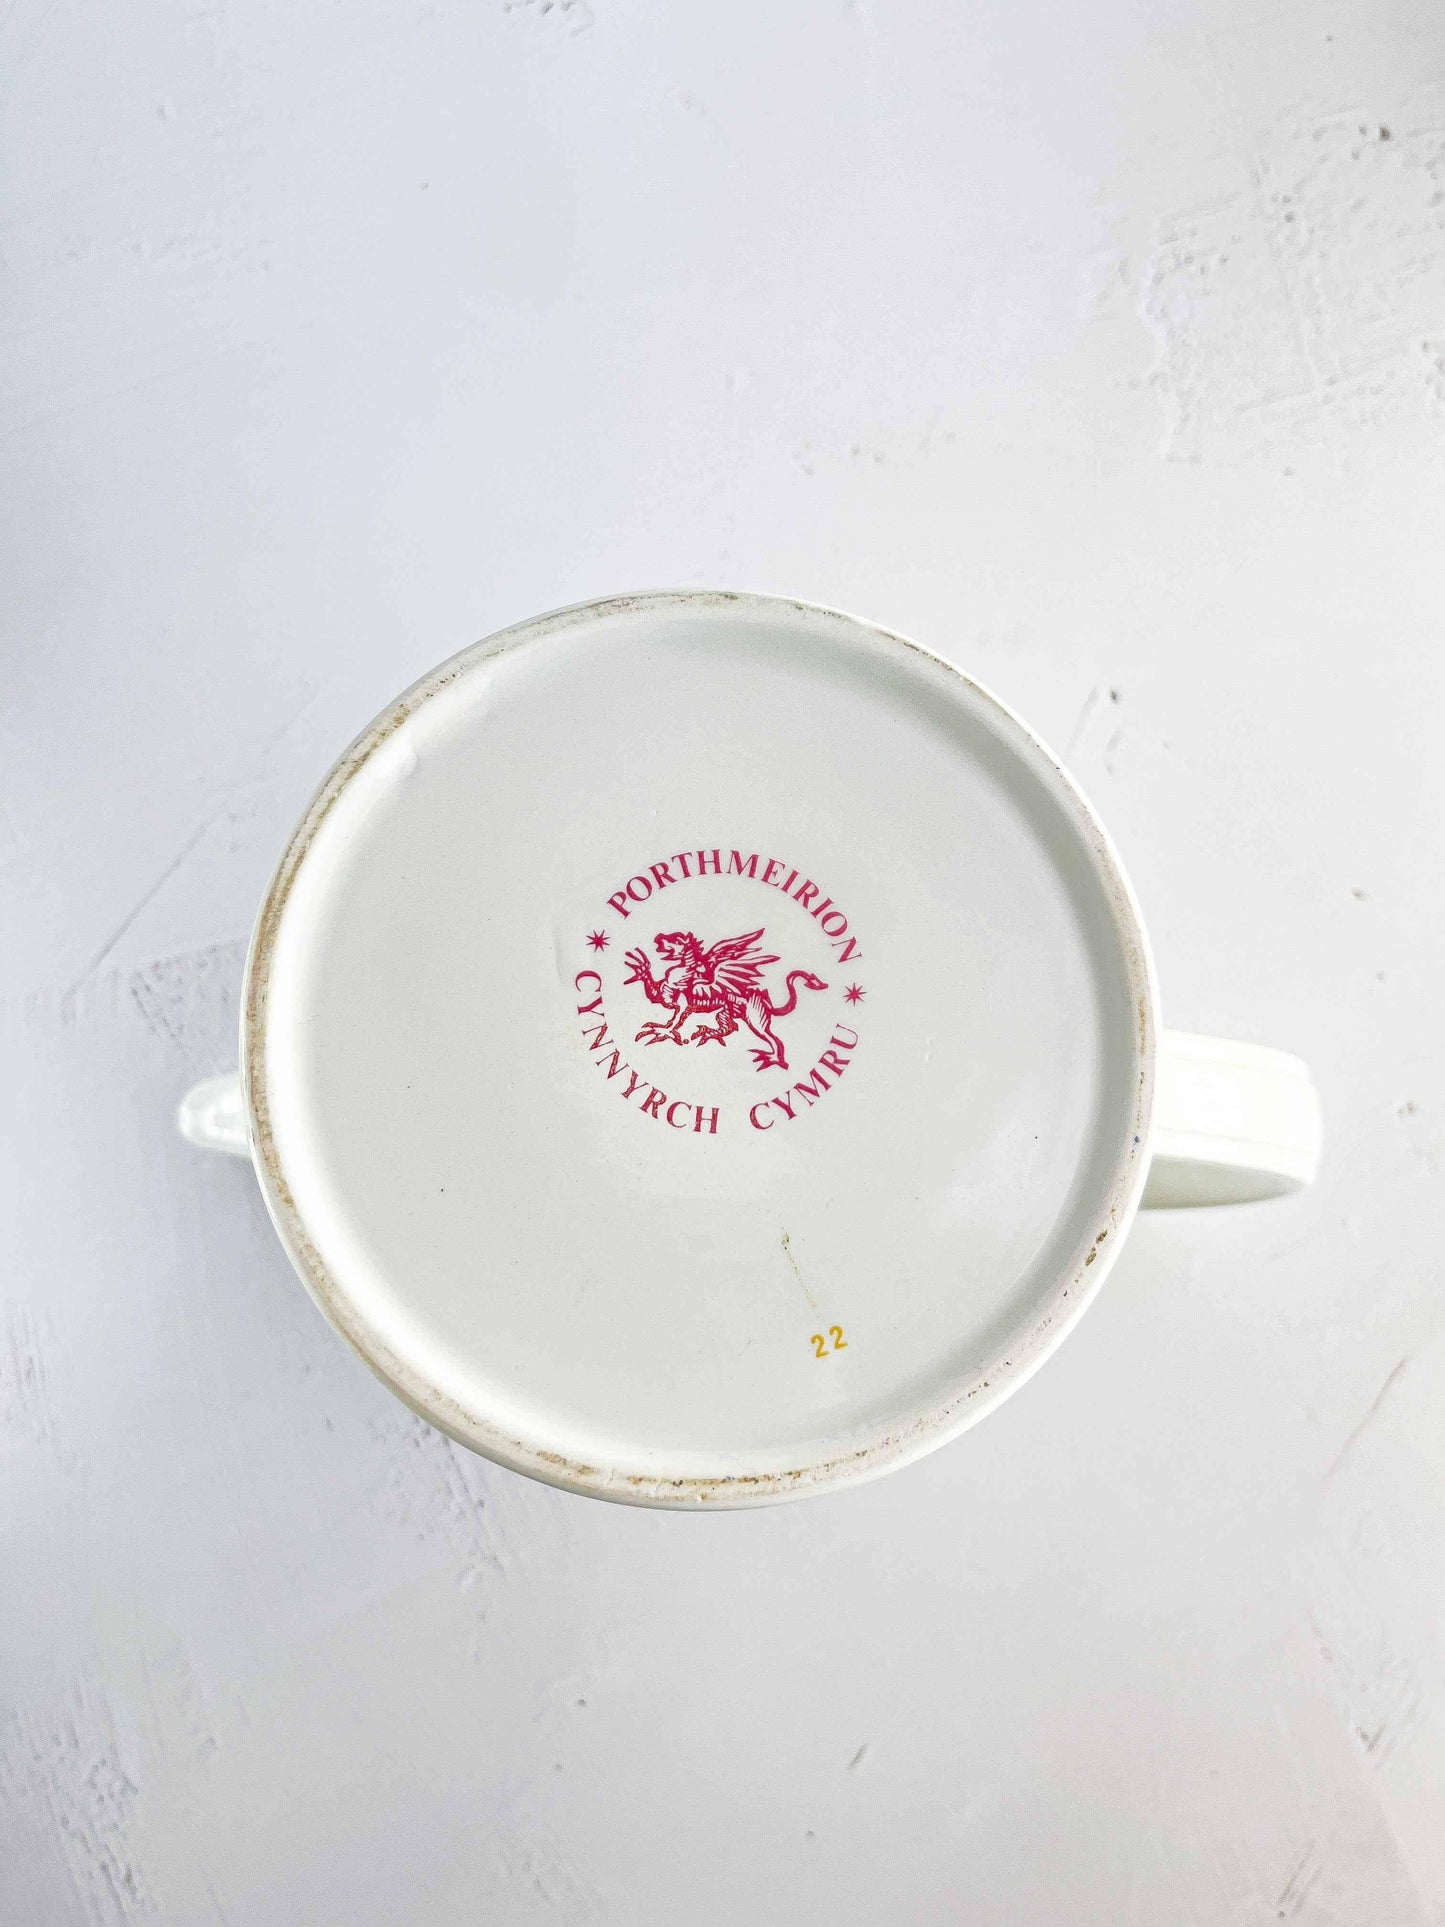 Portmeirion Botanic Garden Coffee/Teapot - Trailing Bindweed & Spanish Gum Cistus - SOSC Home